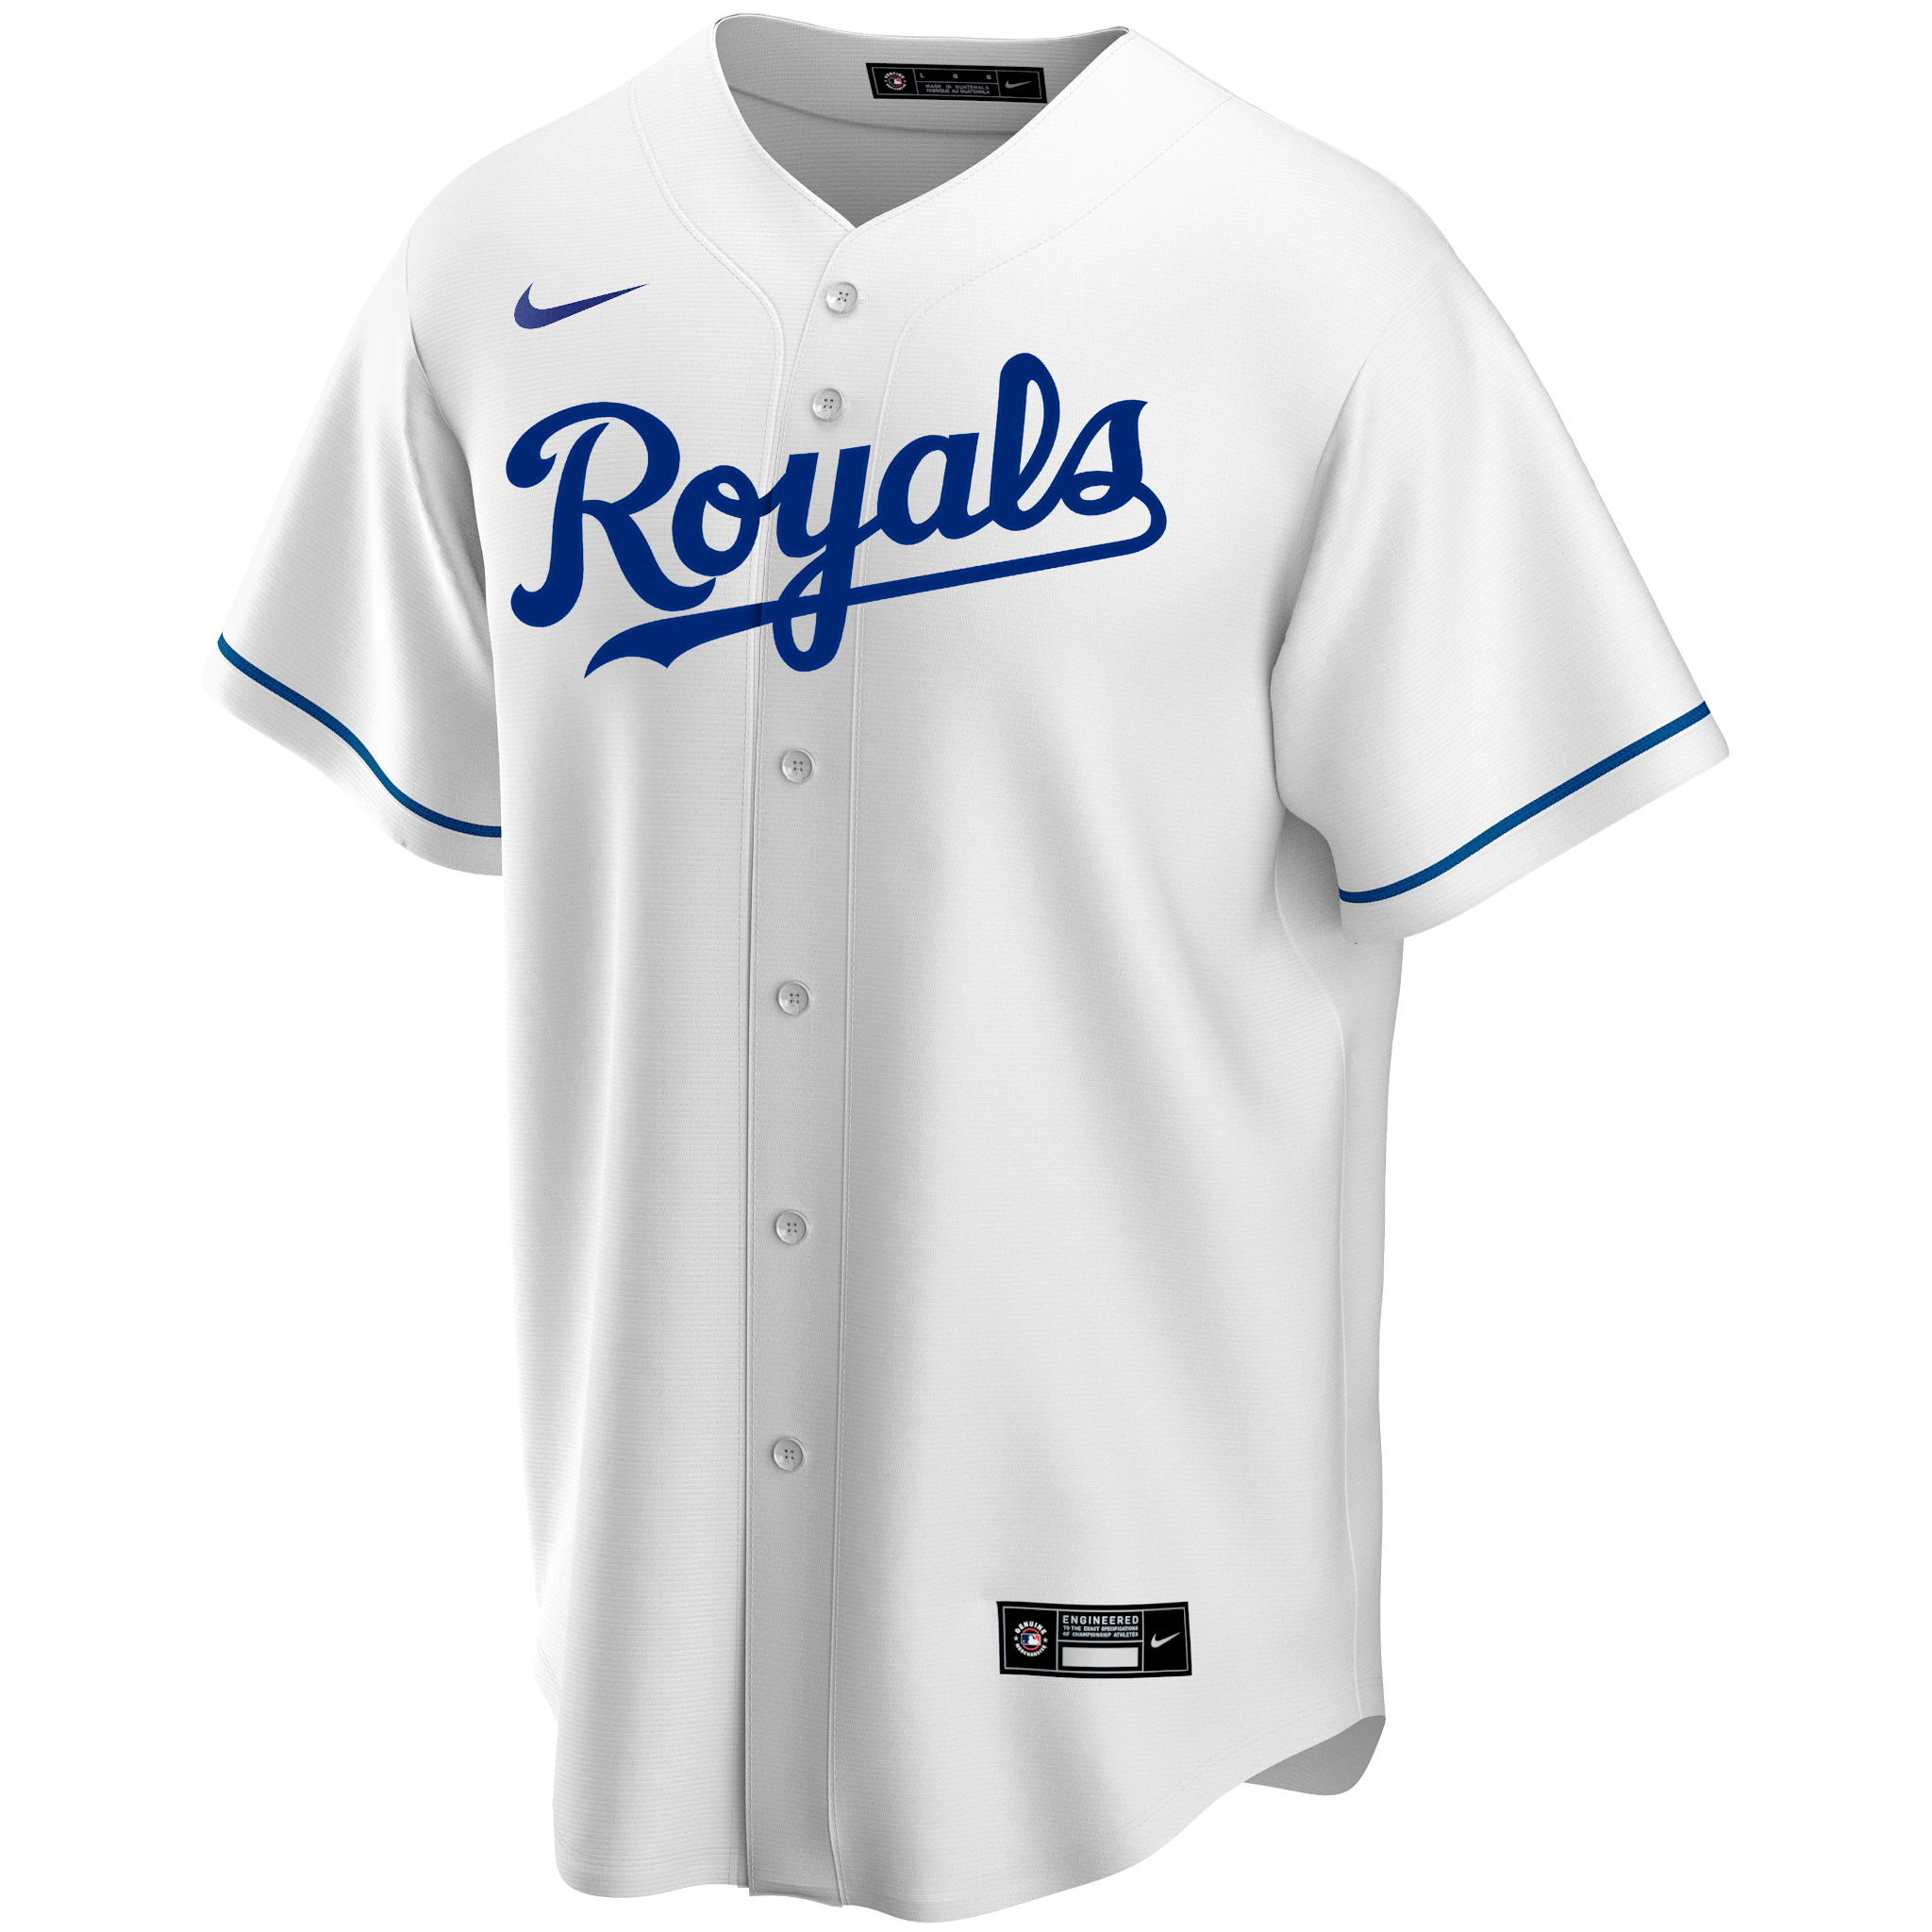 MLB Kansas City Royals Mix Jersey Custom Personalized Hoodie Shirt - Growkoc